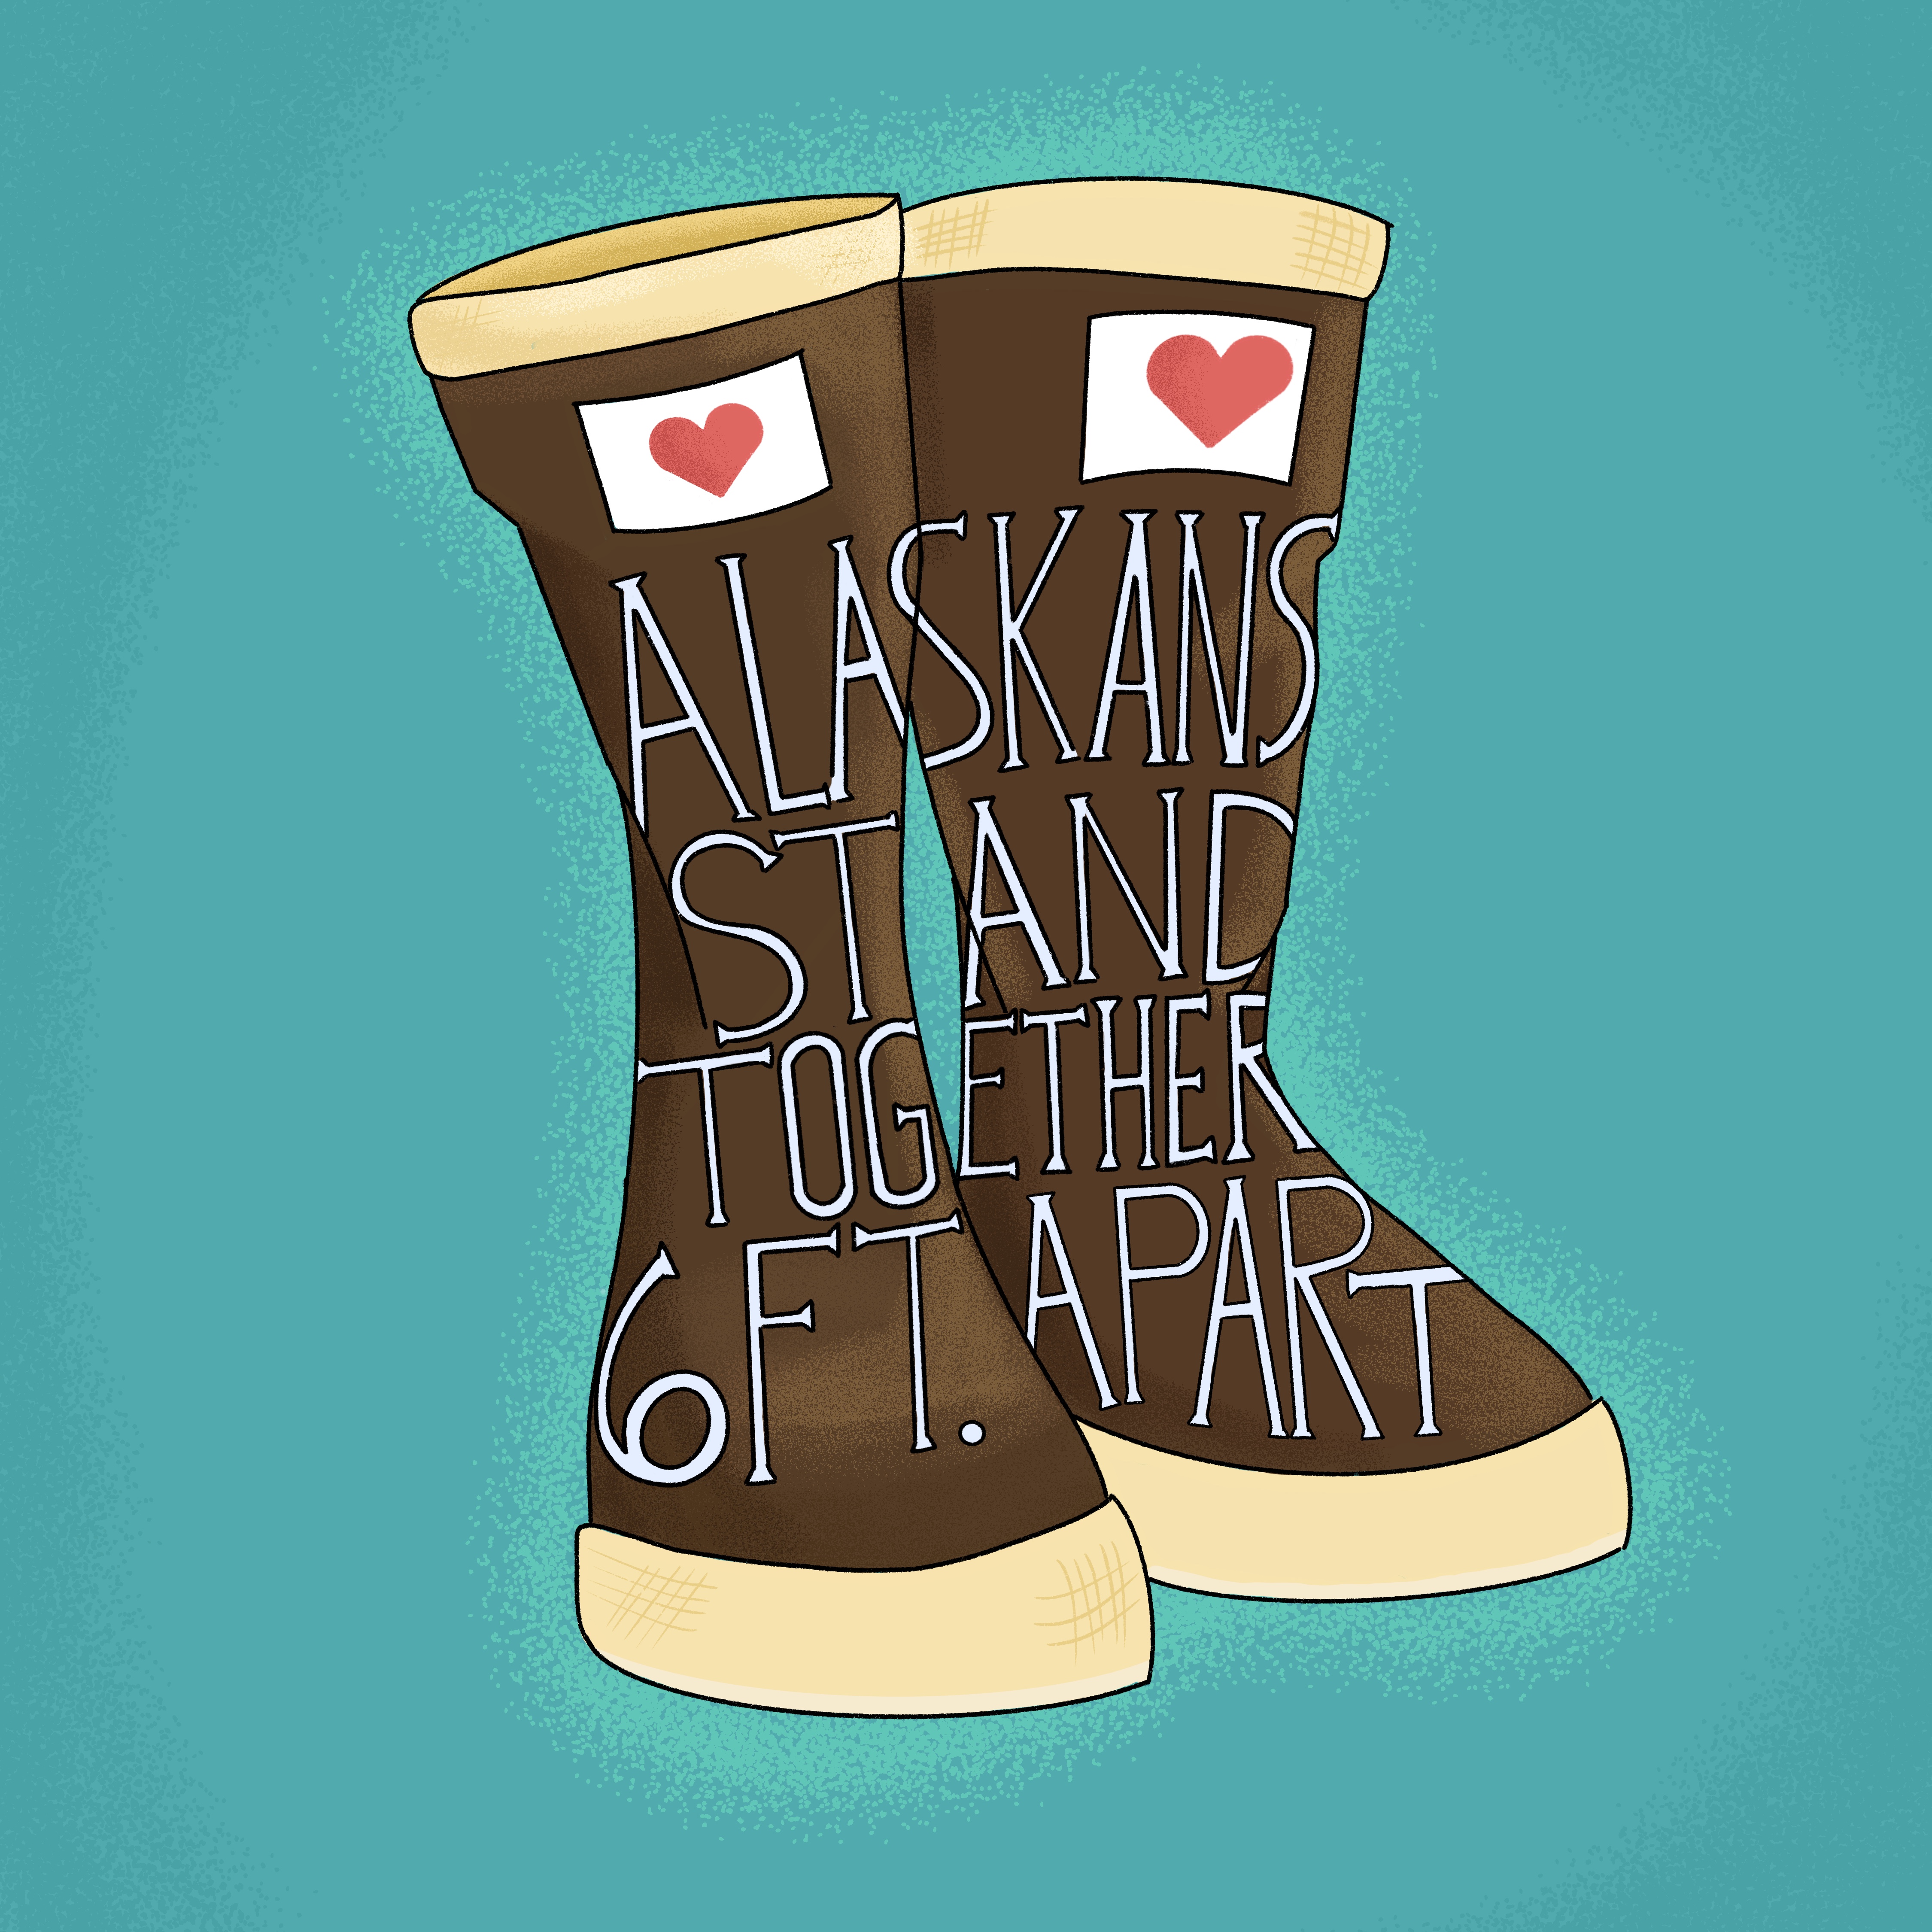 Alaskans stand together 6 feet apart